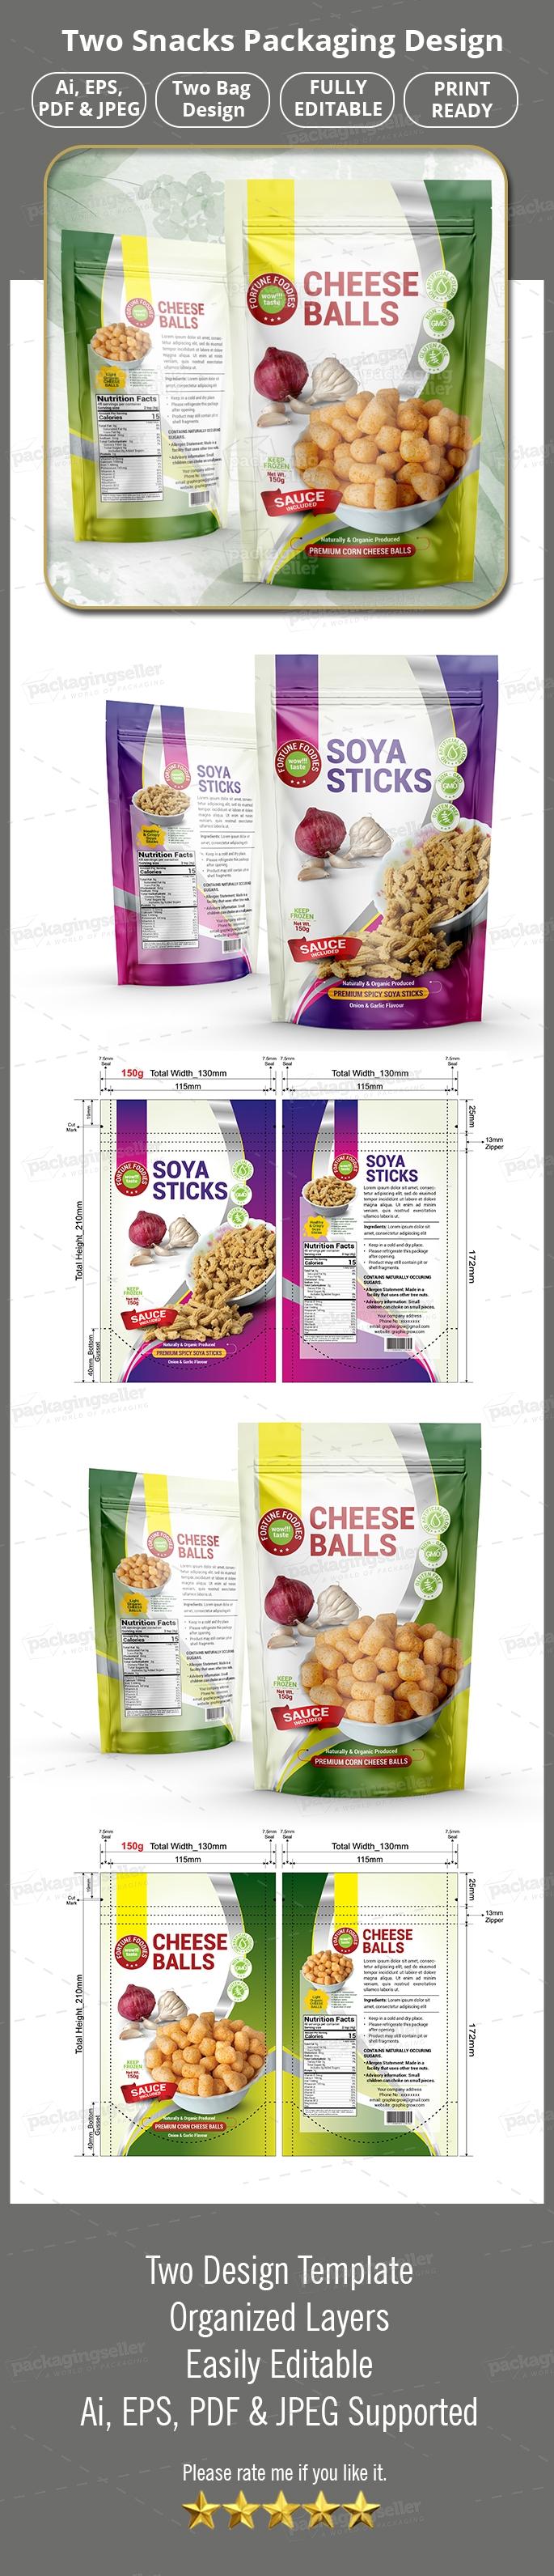 Snacks-packaging-Design